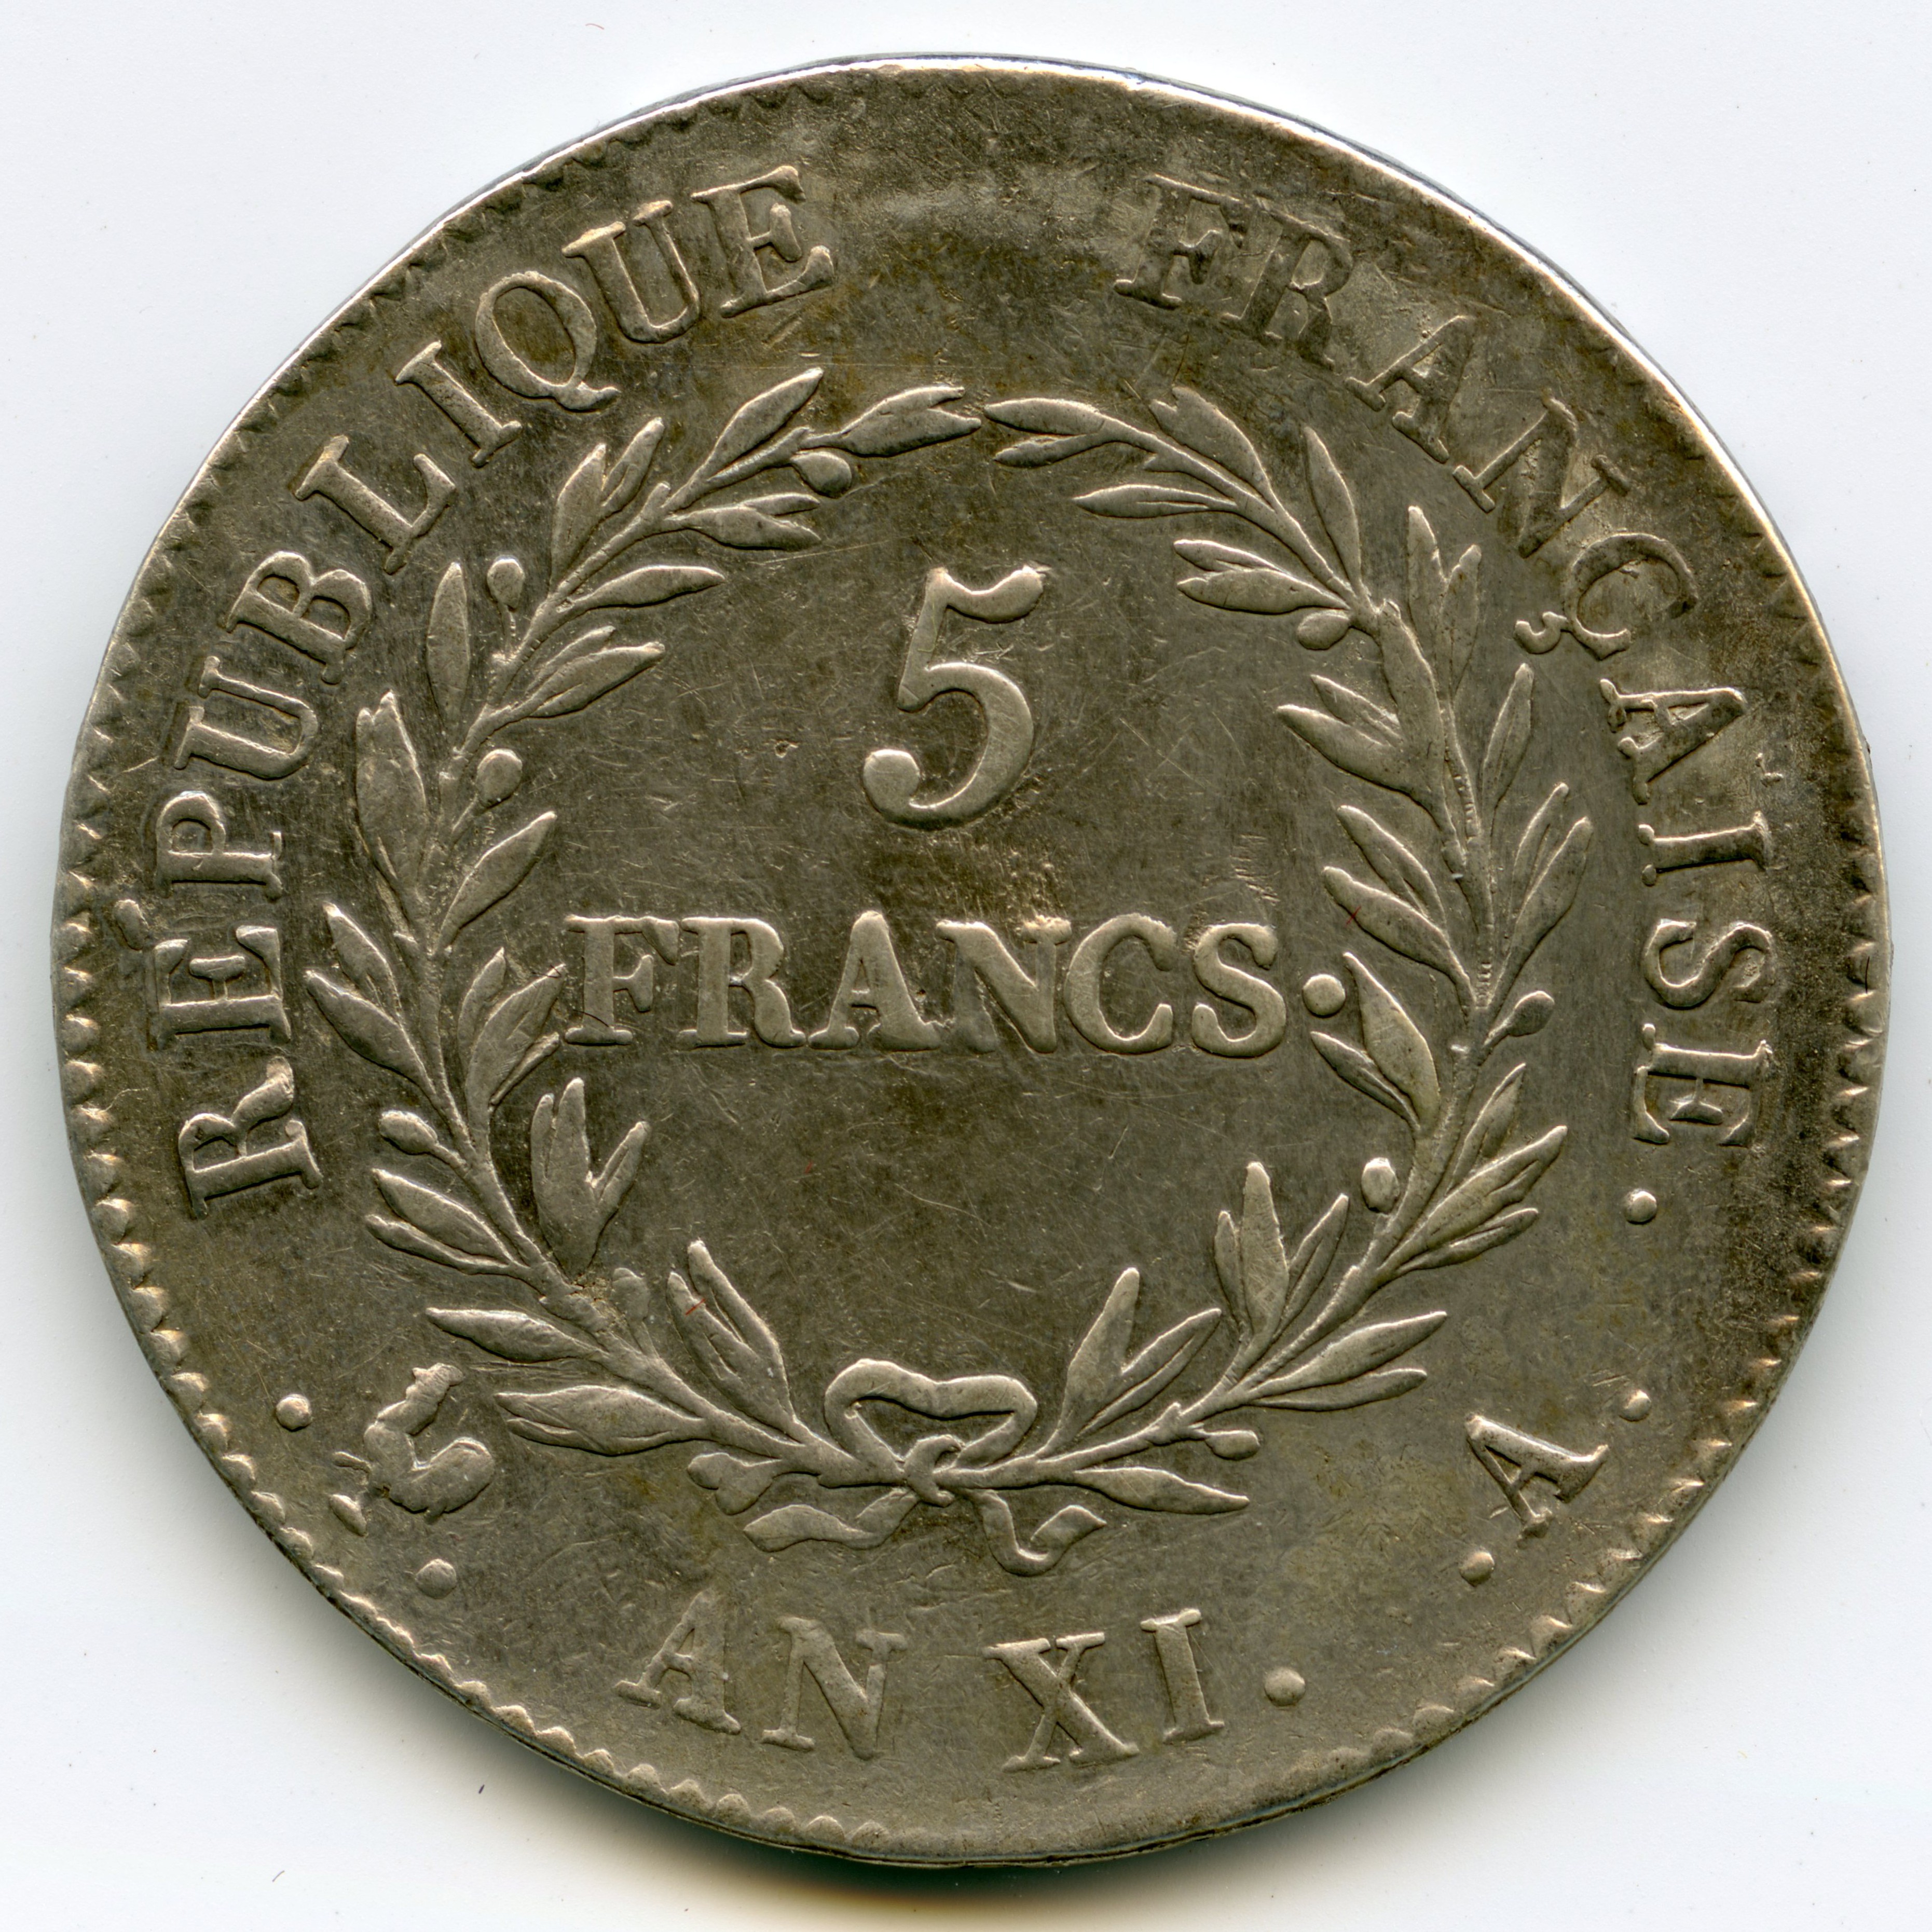 Le Consulat - 5 Francs - An XI - Paris revers